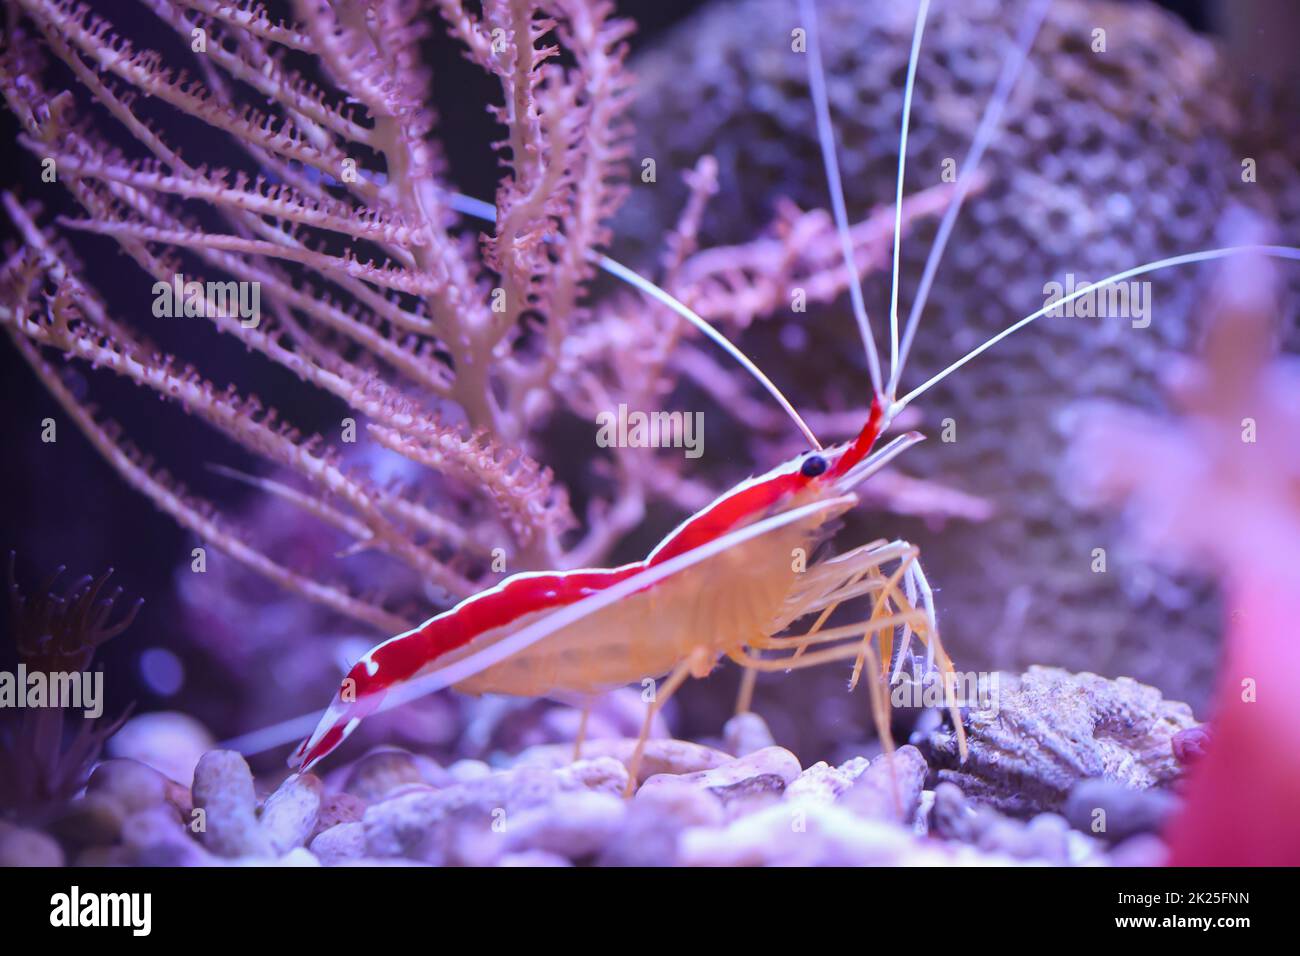 A white ribbon shrimp in a saltwater aquarium. Stock Photo